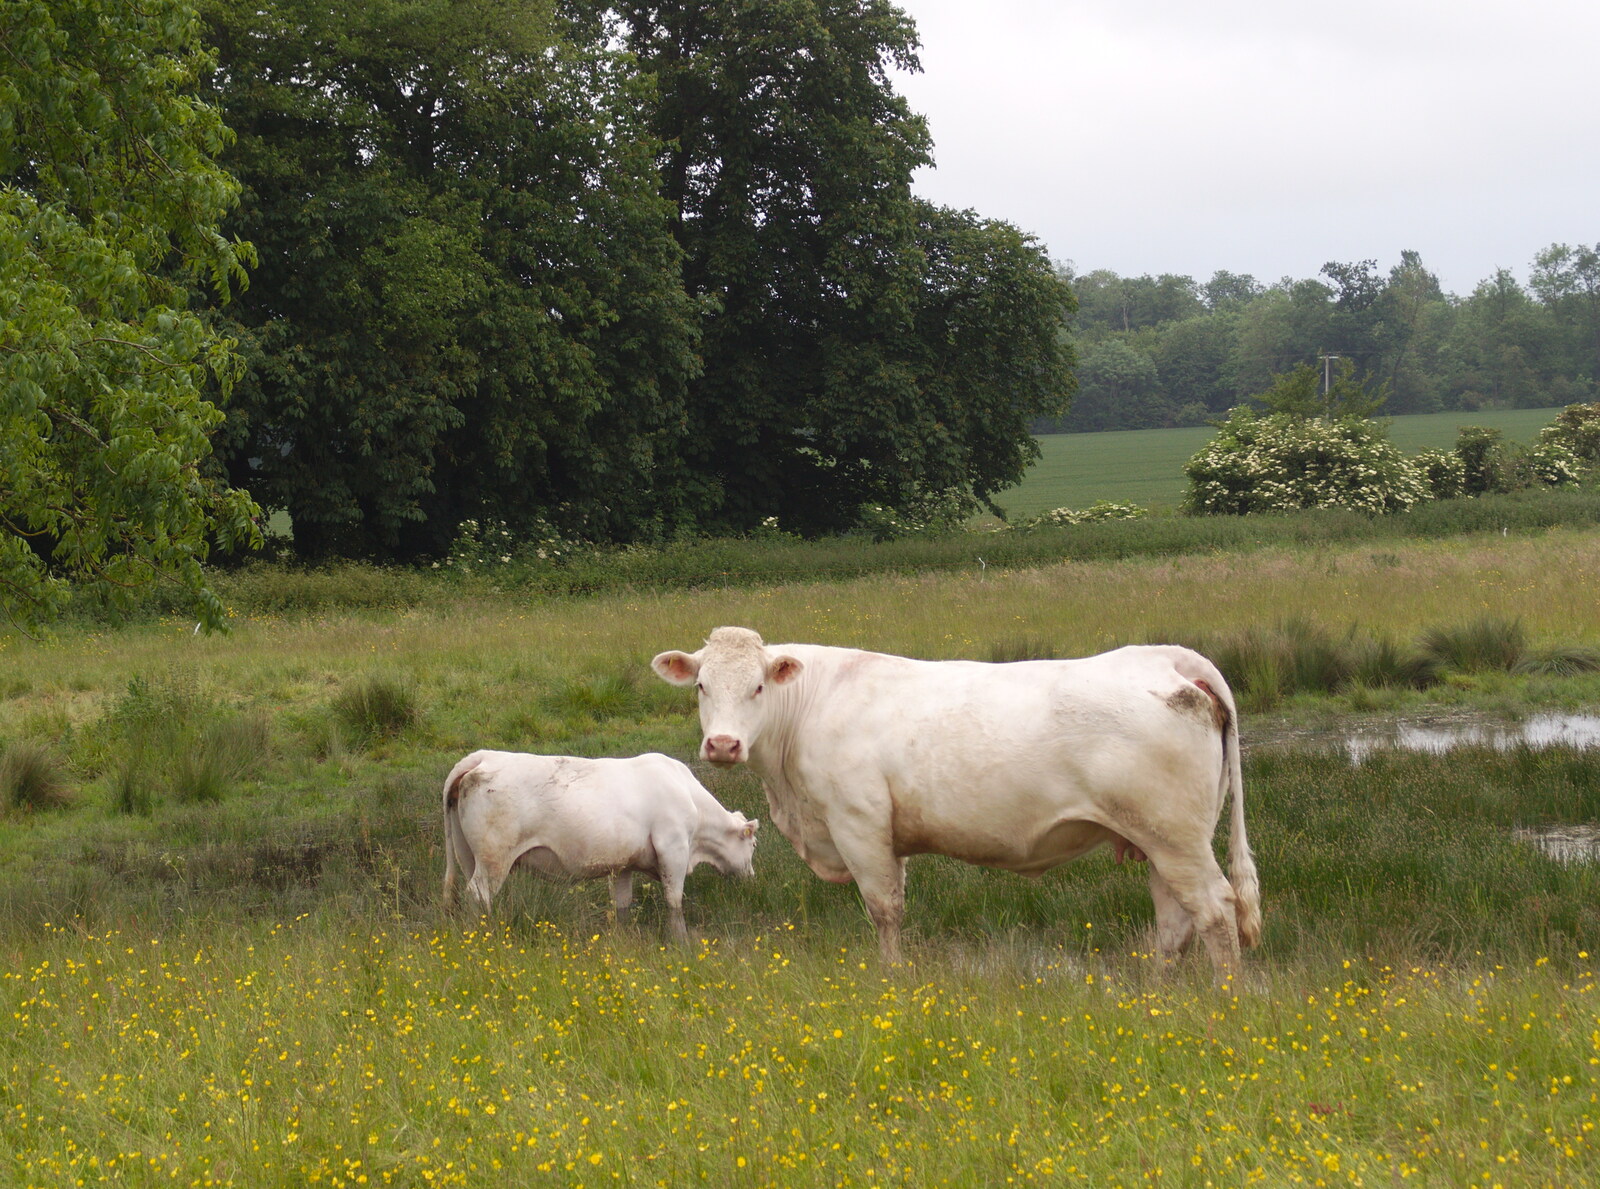 The BSCC at the Railway Tavern, Mellis, Suffolk - 28th May 2014: More cows at Mellis